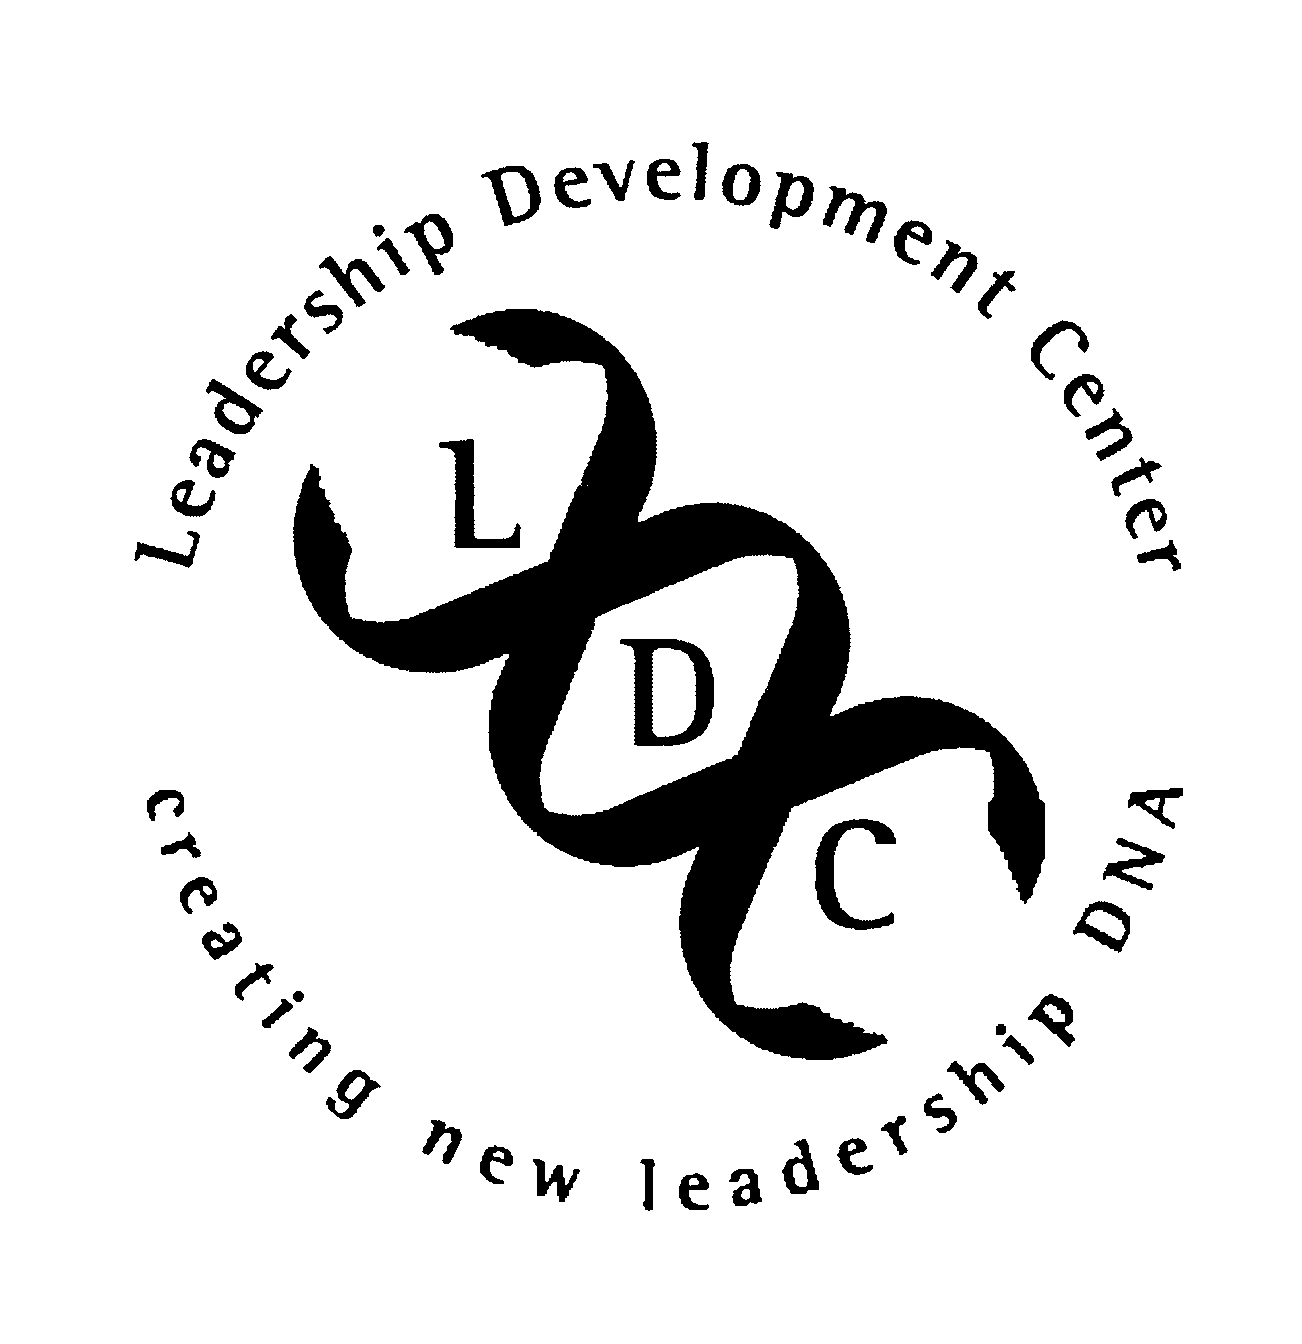  LDC LEADERSHIP DEVELOPMENT CENTER CREATING NEW LEADERSHIP DNA